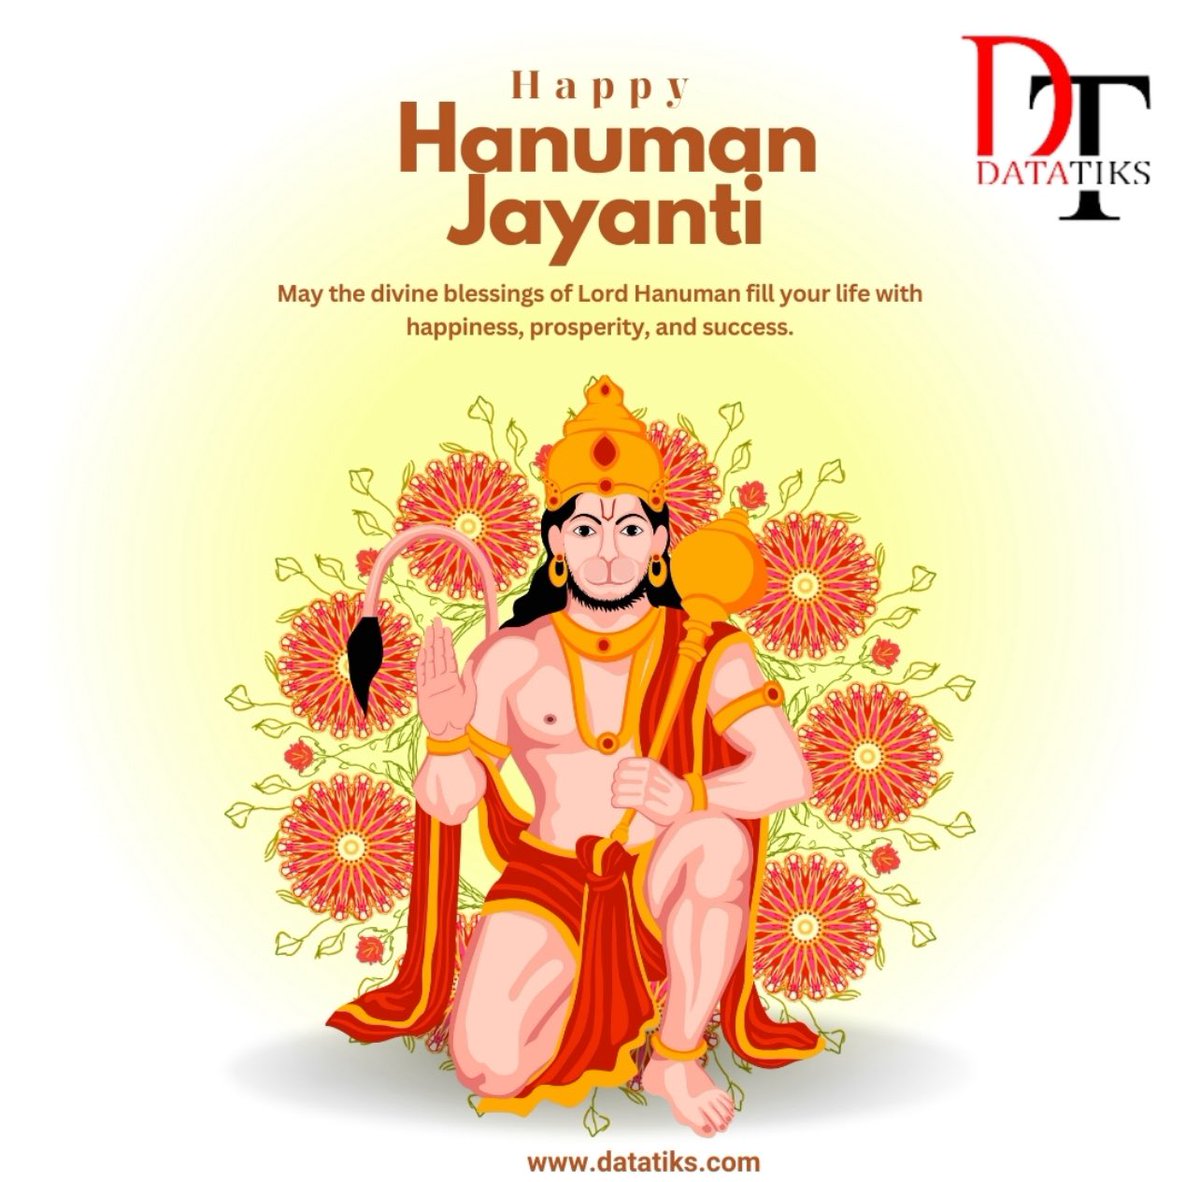 Happy Hanuman Jayanti to you & family 💐🙏

#happyhanumanjayanthi #jaisriram #hanuman

@narendramodi @ysjagan @ncbn @PawanKalyan @revanth_anumula @KTRBRS @sachin_rt @arrahman @tejaswinimanogn @UrmilaGajapathi @VVL_Official @RSPraveenSwaero @KarthikIndrAnna @Arvindharmapuri